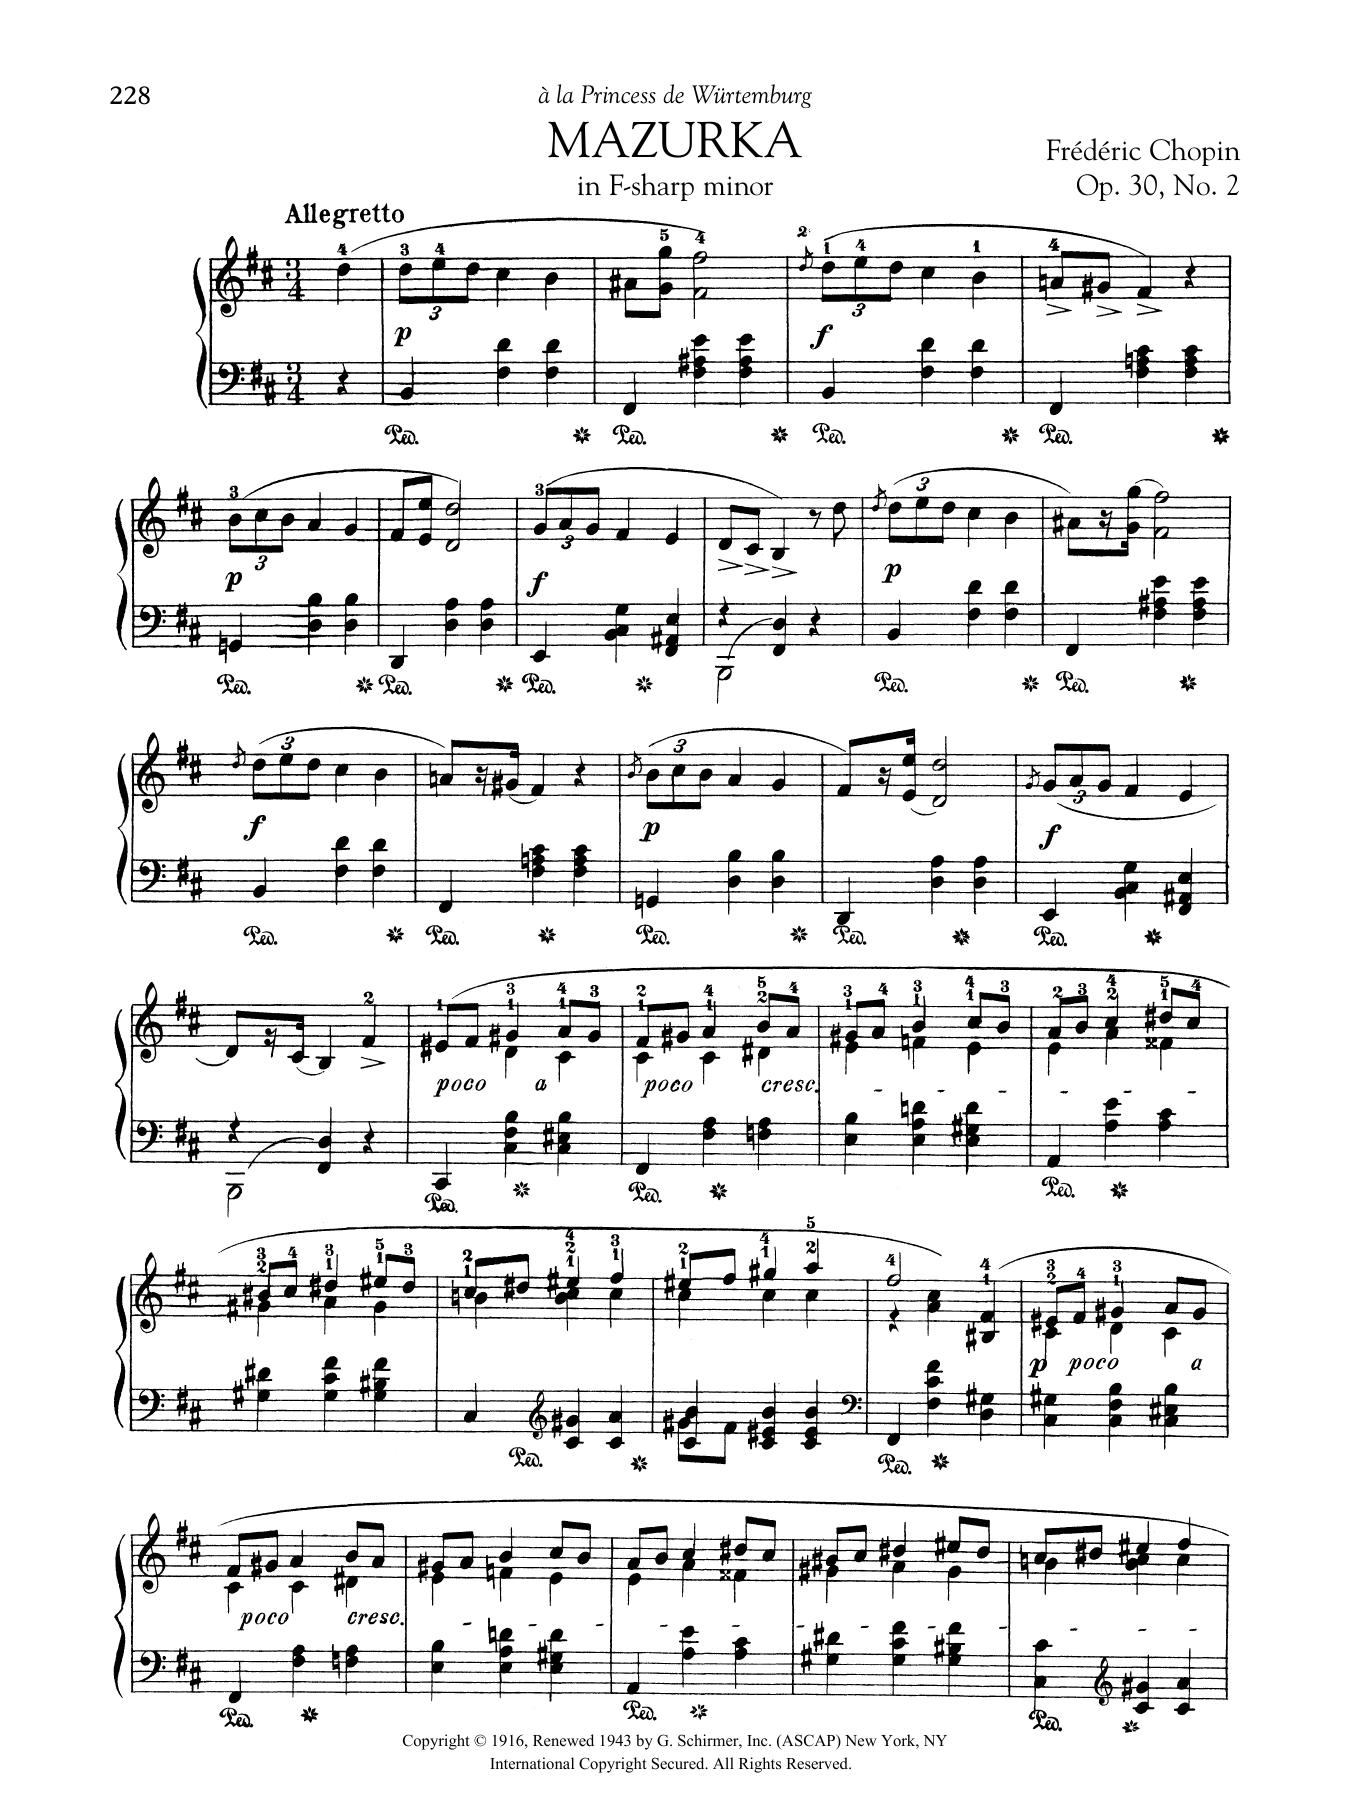 Download Frederic Chopin Mazurka in F-sharp minor, Op. 30, No. 2 Sheet Music